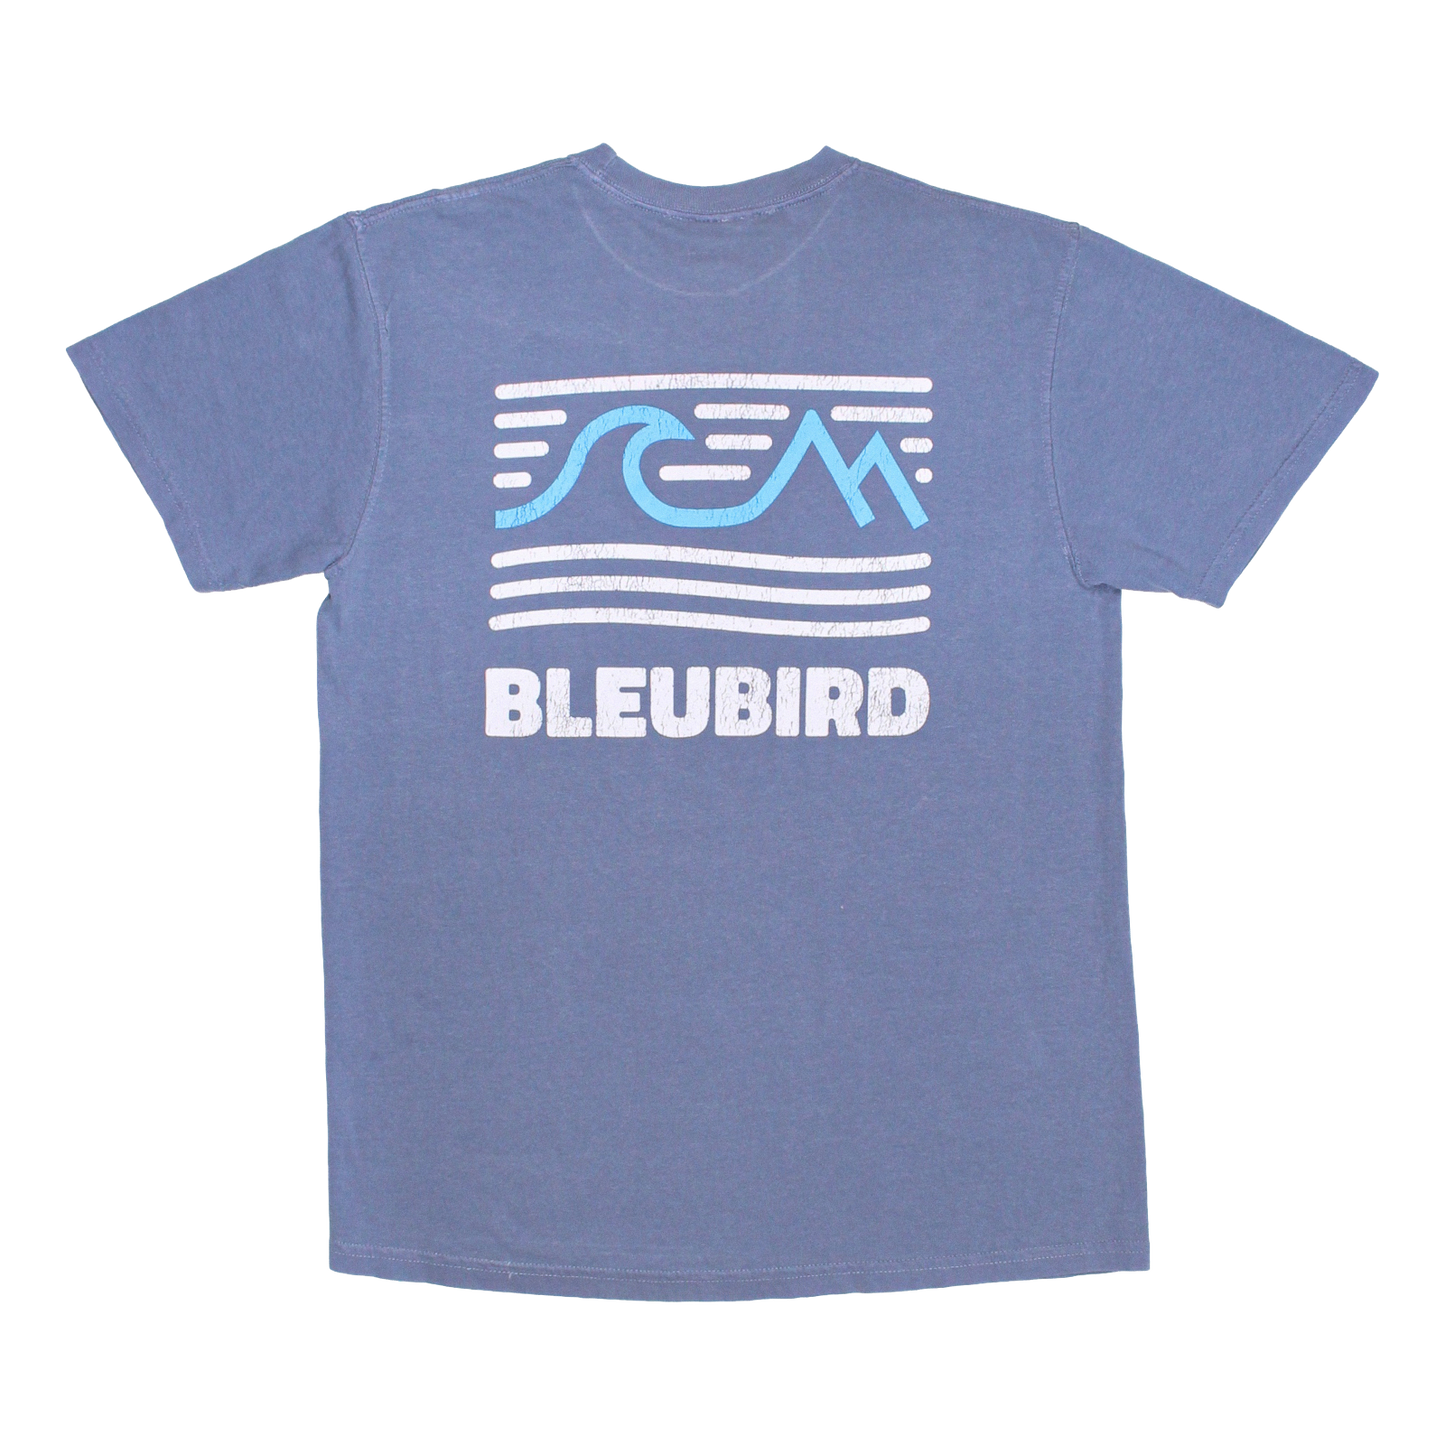 Bleubird Tides Tee